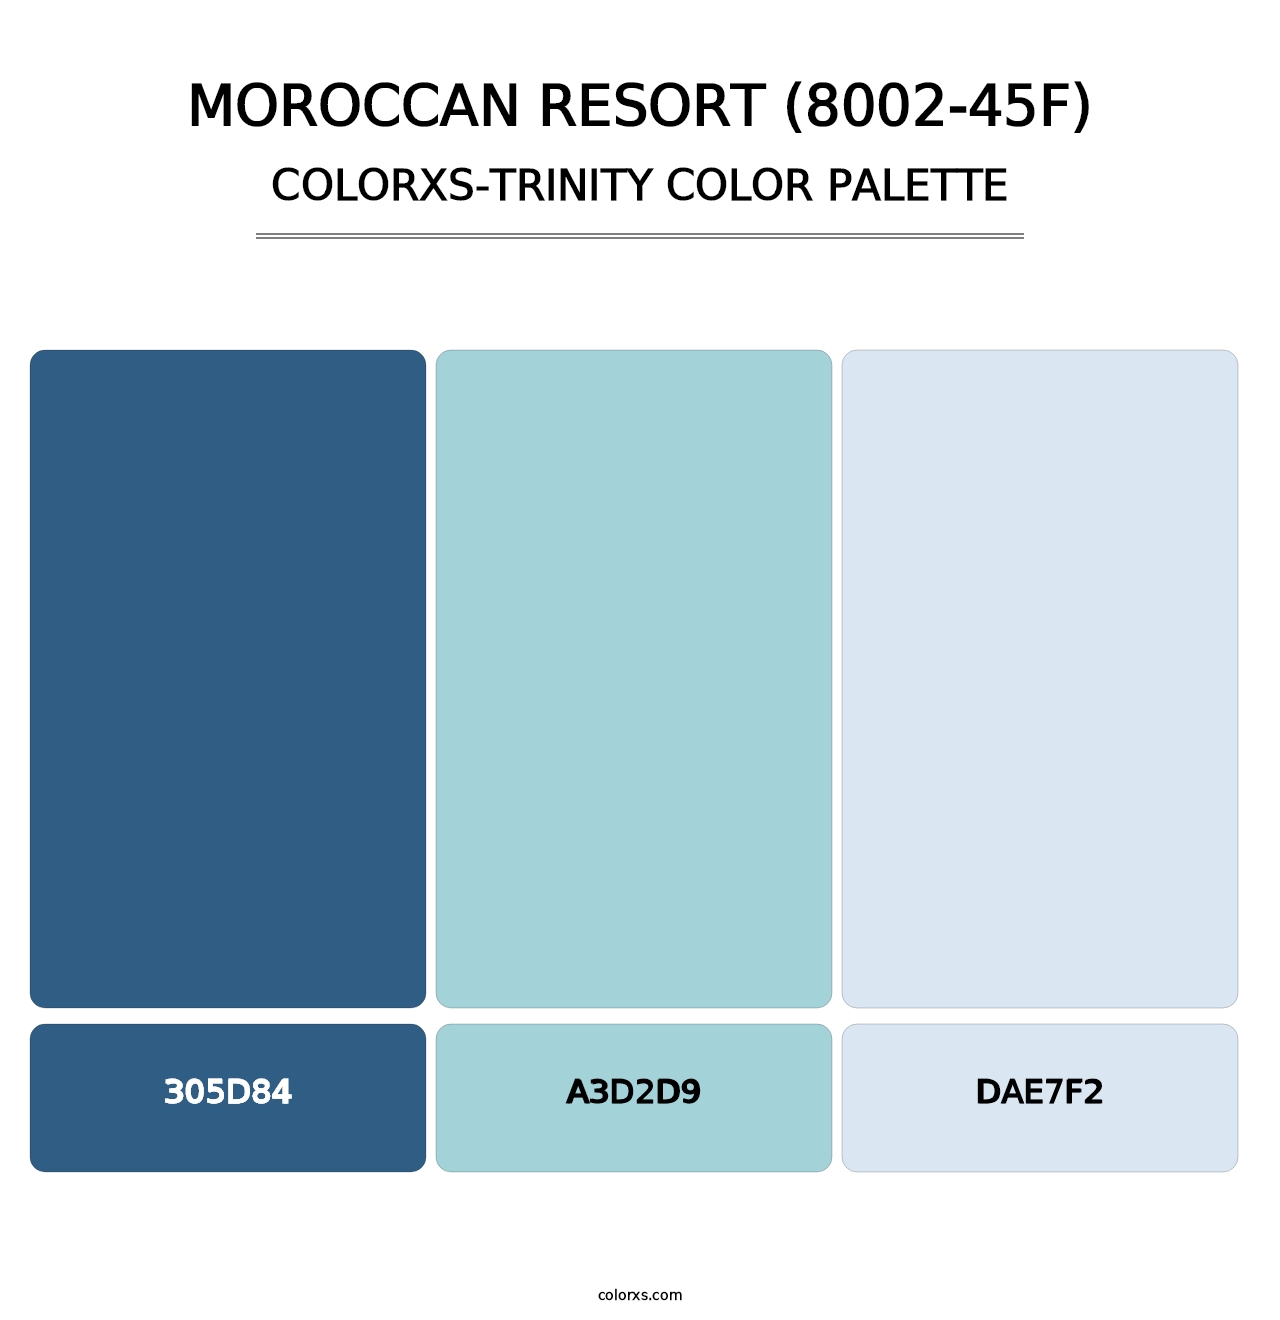 Moroccan Resort (8002-45F) - Colorxs Trinity Palette